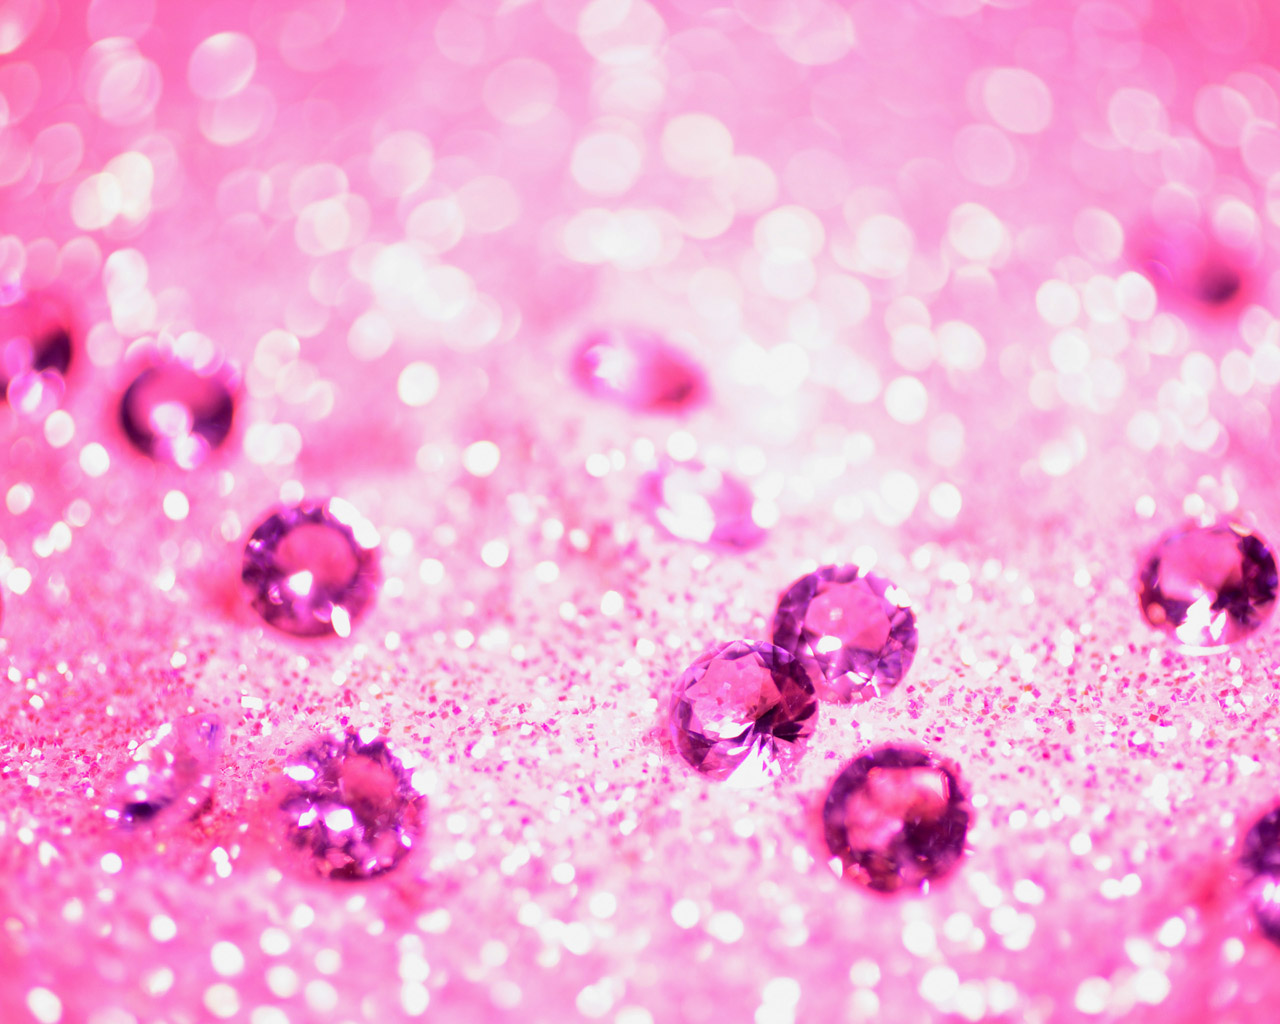  Pink Diamond Desktop Wallpaper on this Pink Wallpaper Backgrounds